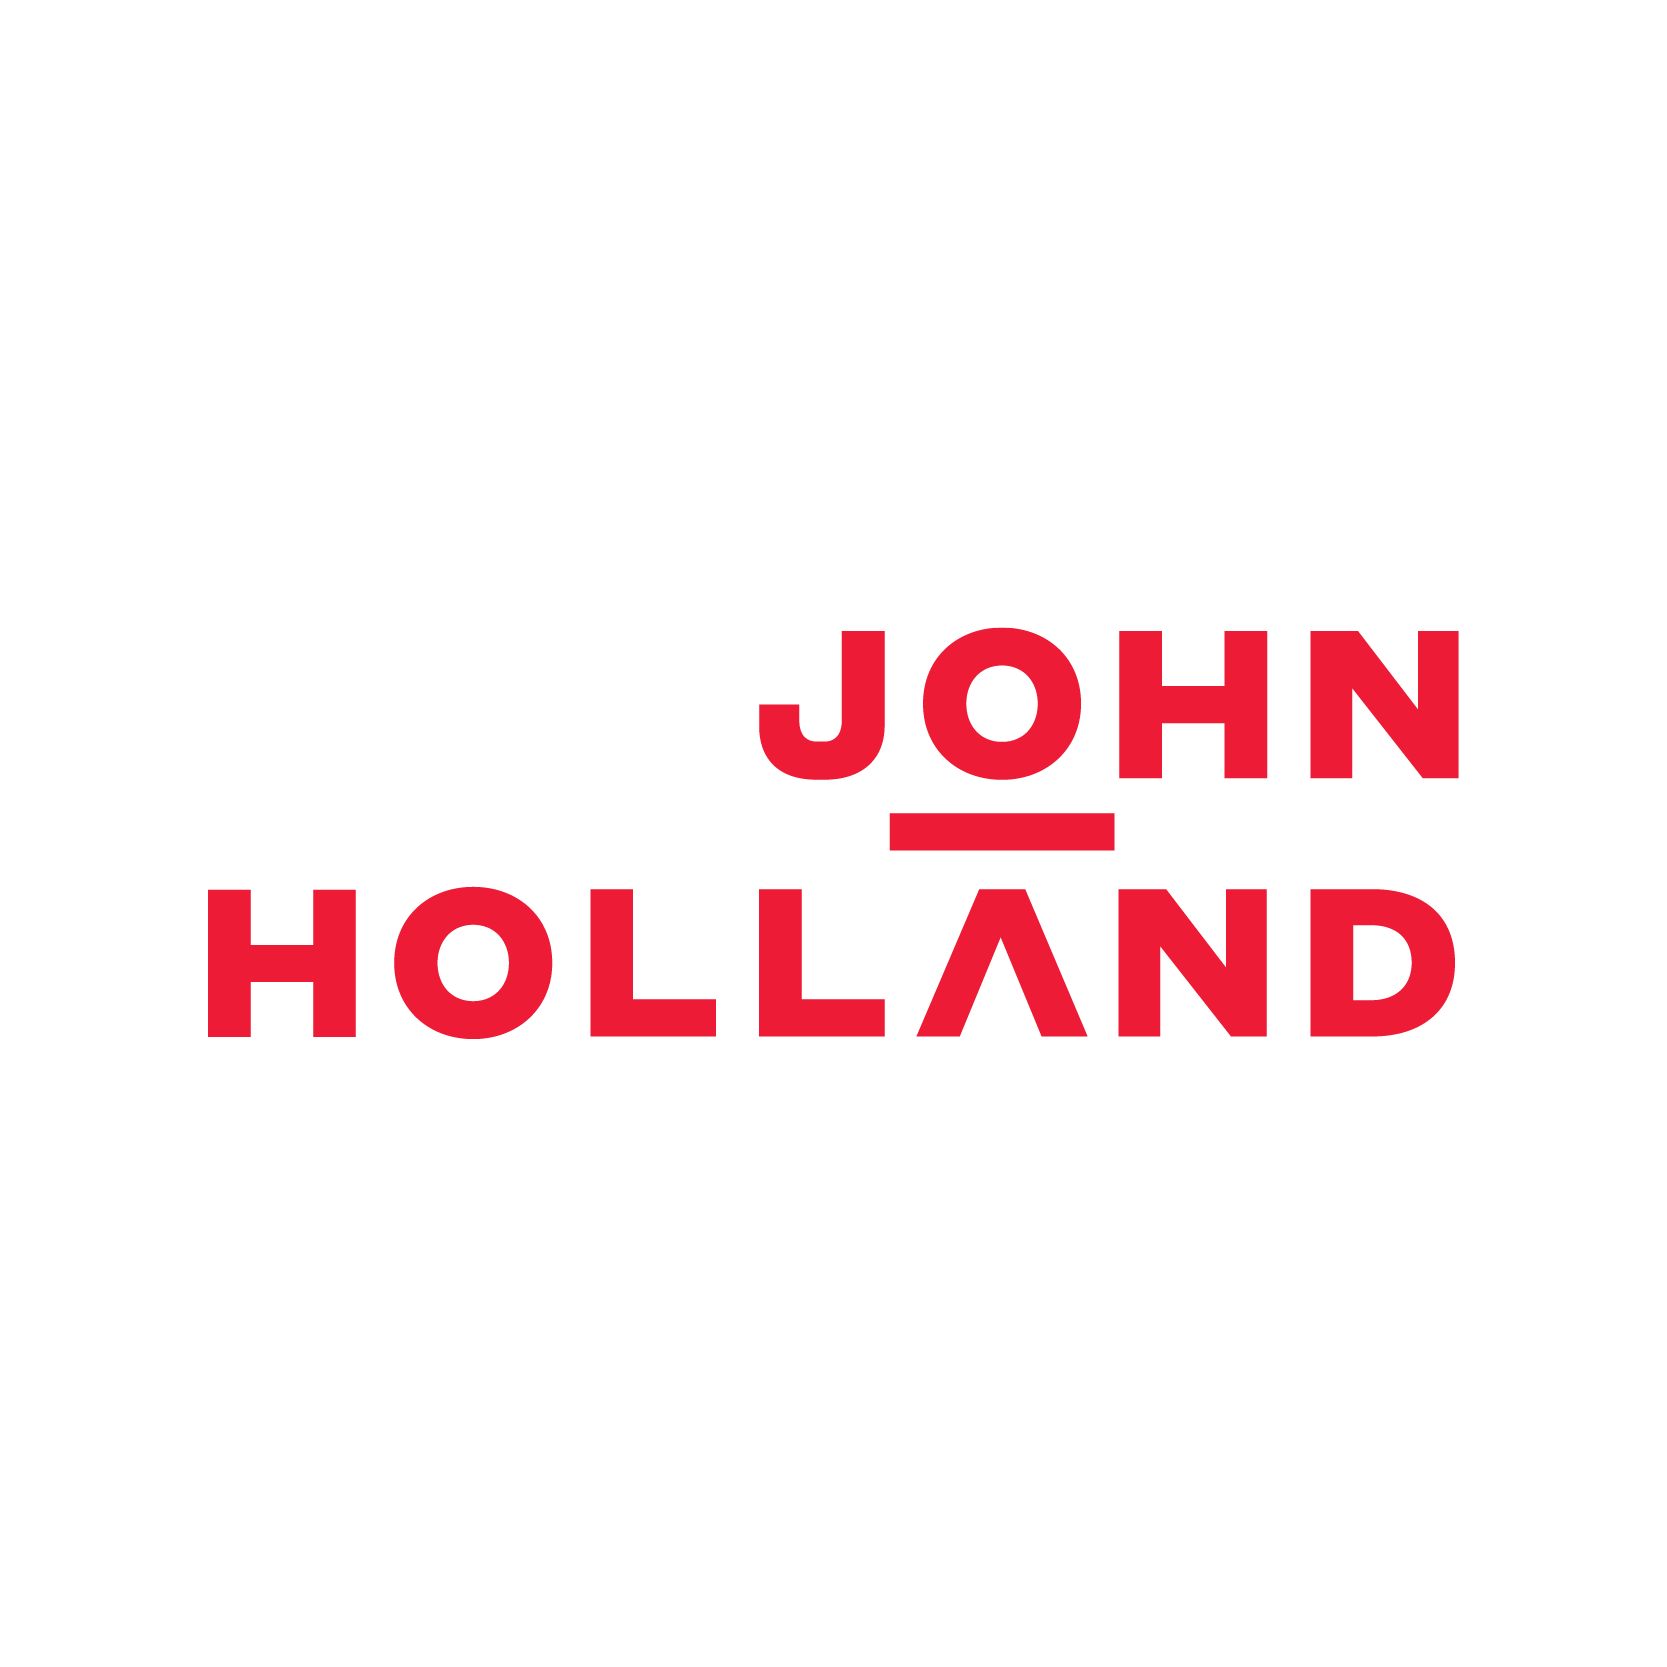 jOHN HOLLAND logo